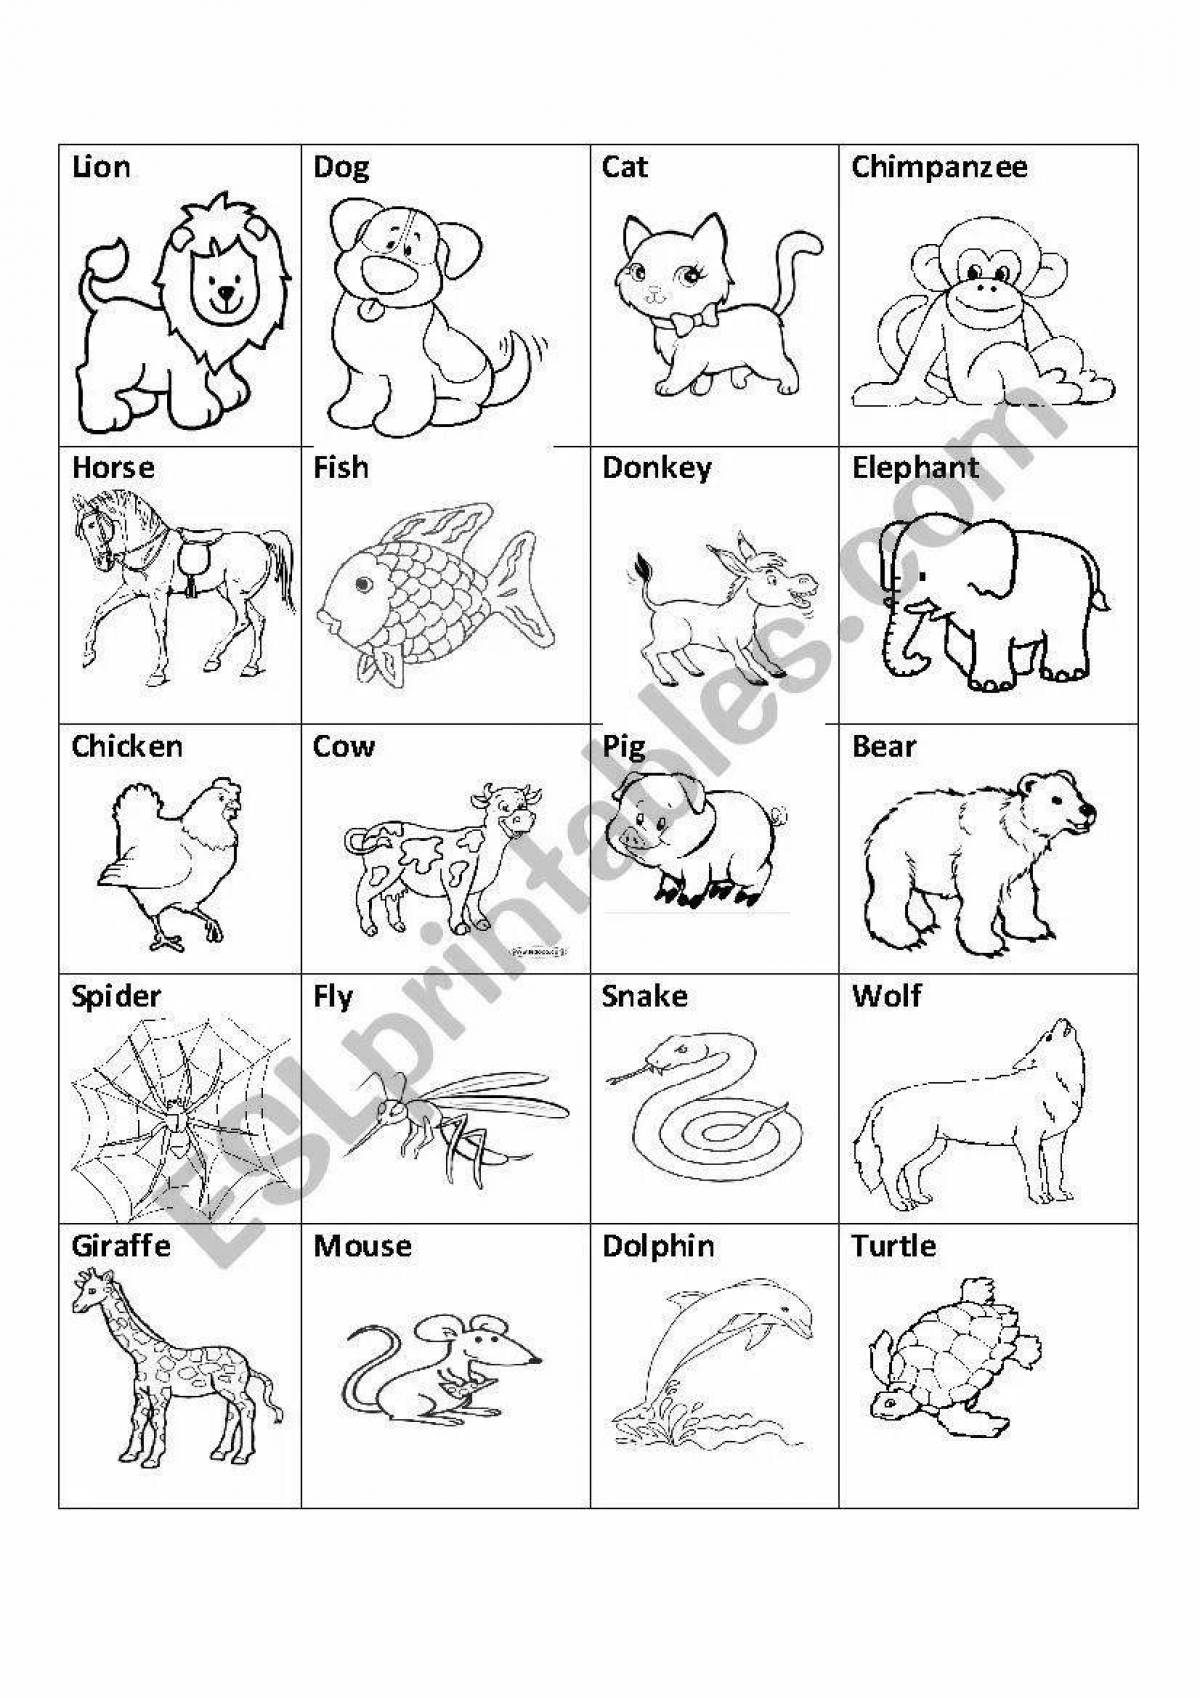 Playful animal coloring in English